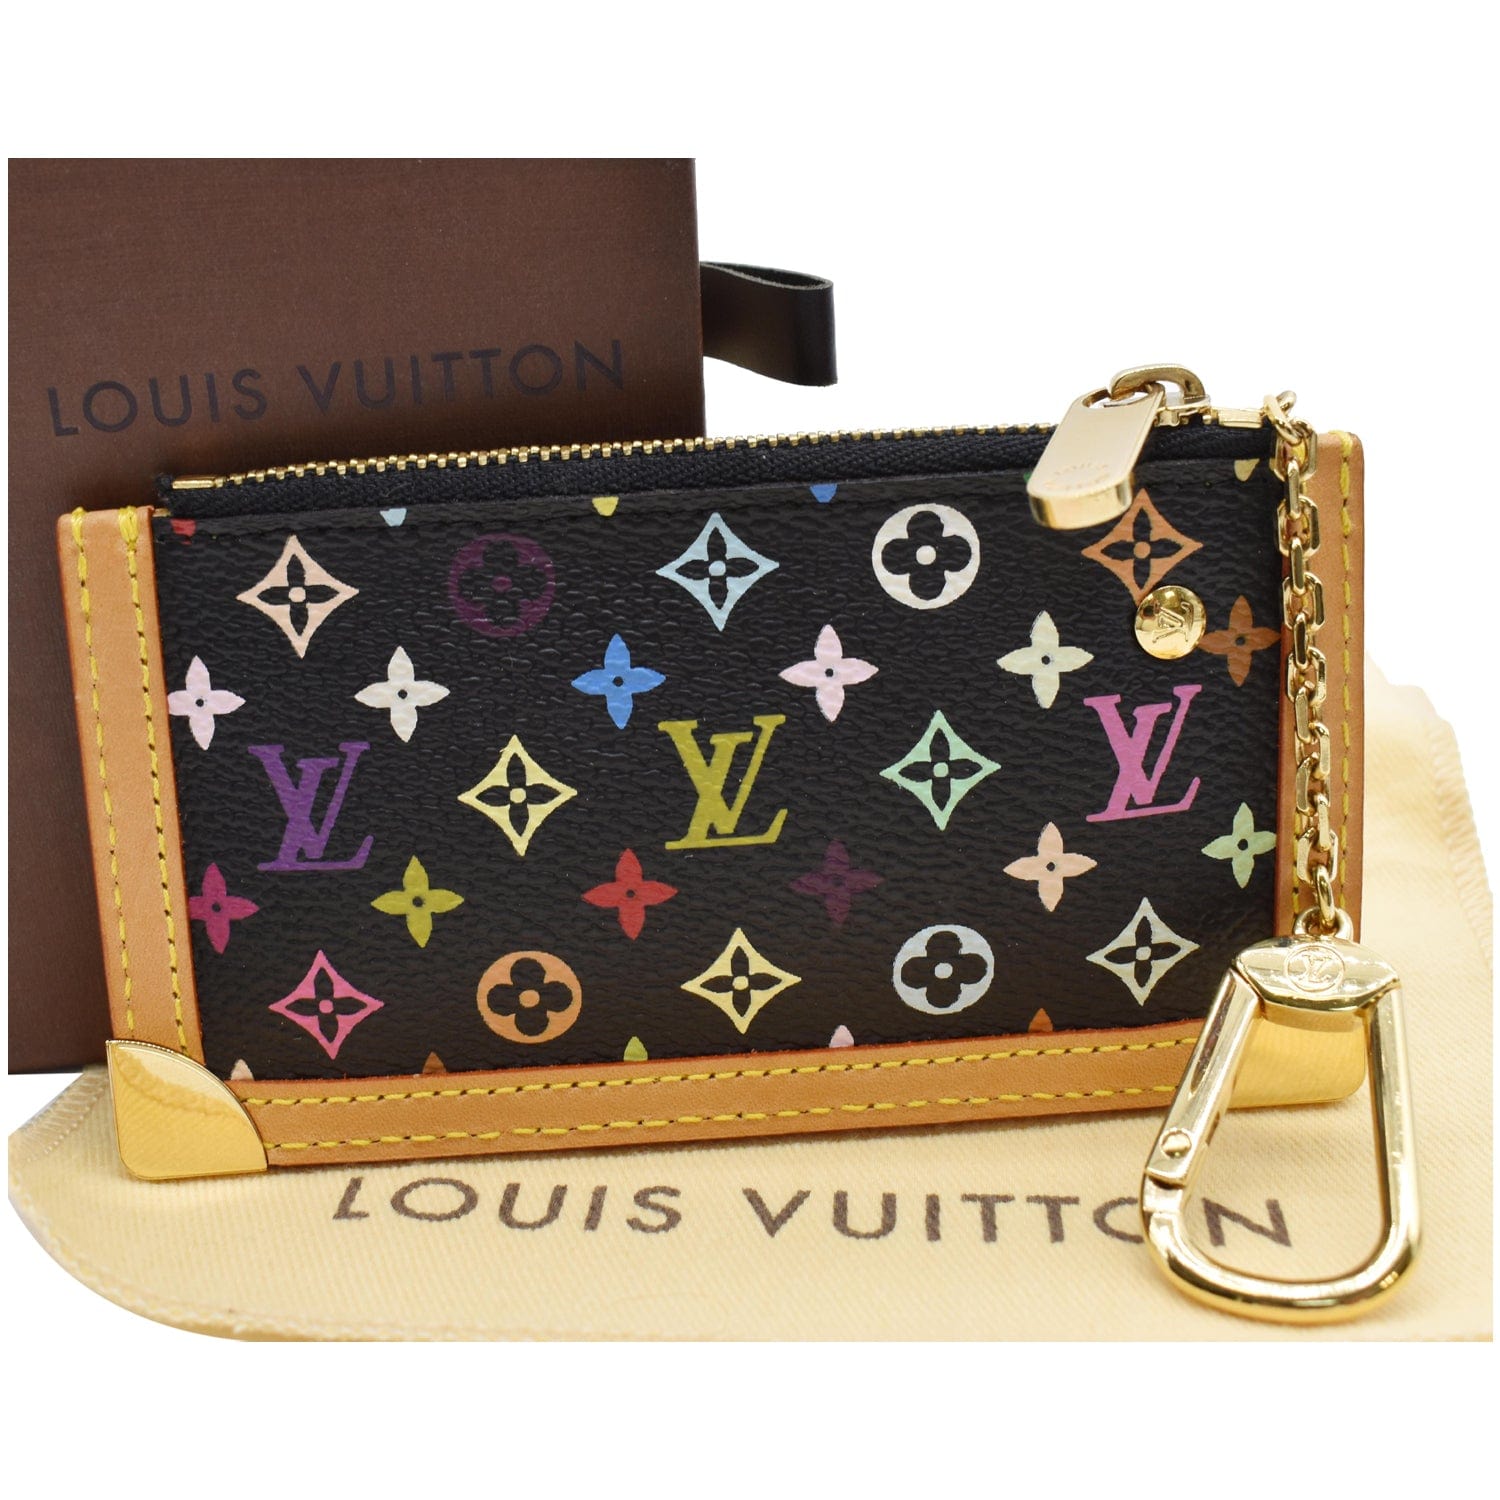 Preloved Louis Vuitton Multicolore Black Pochette Cles Coin Pouch CA00 –  KimmieBBags LLC